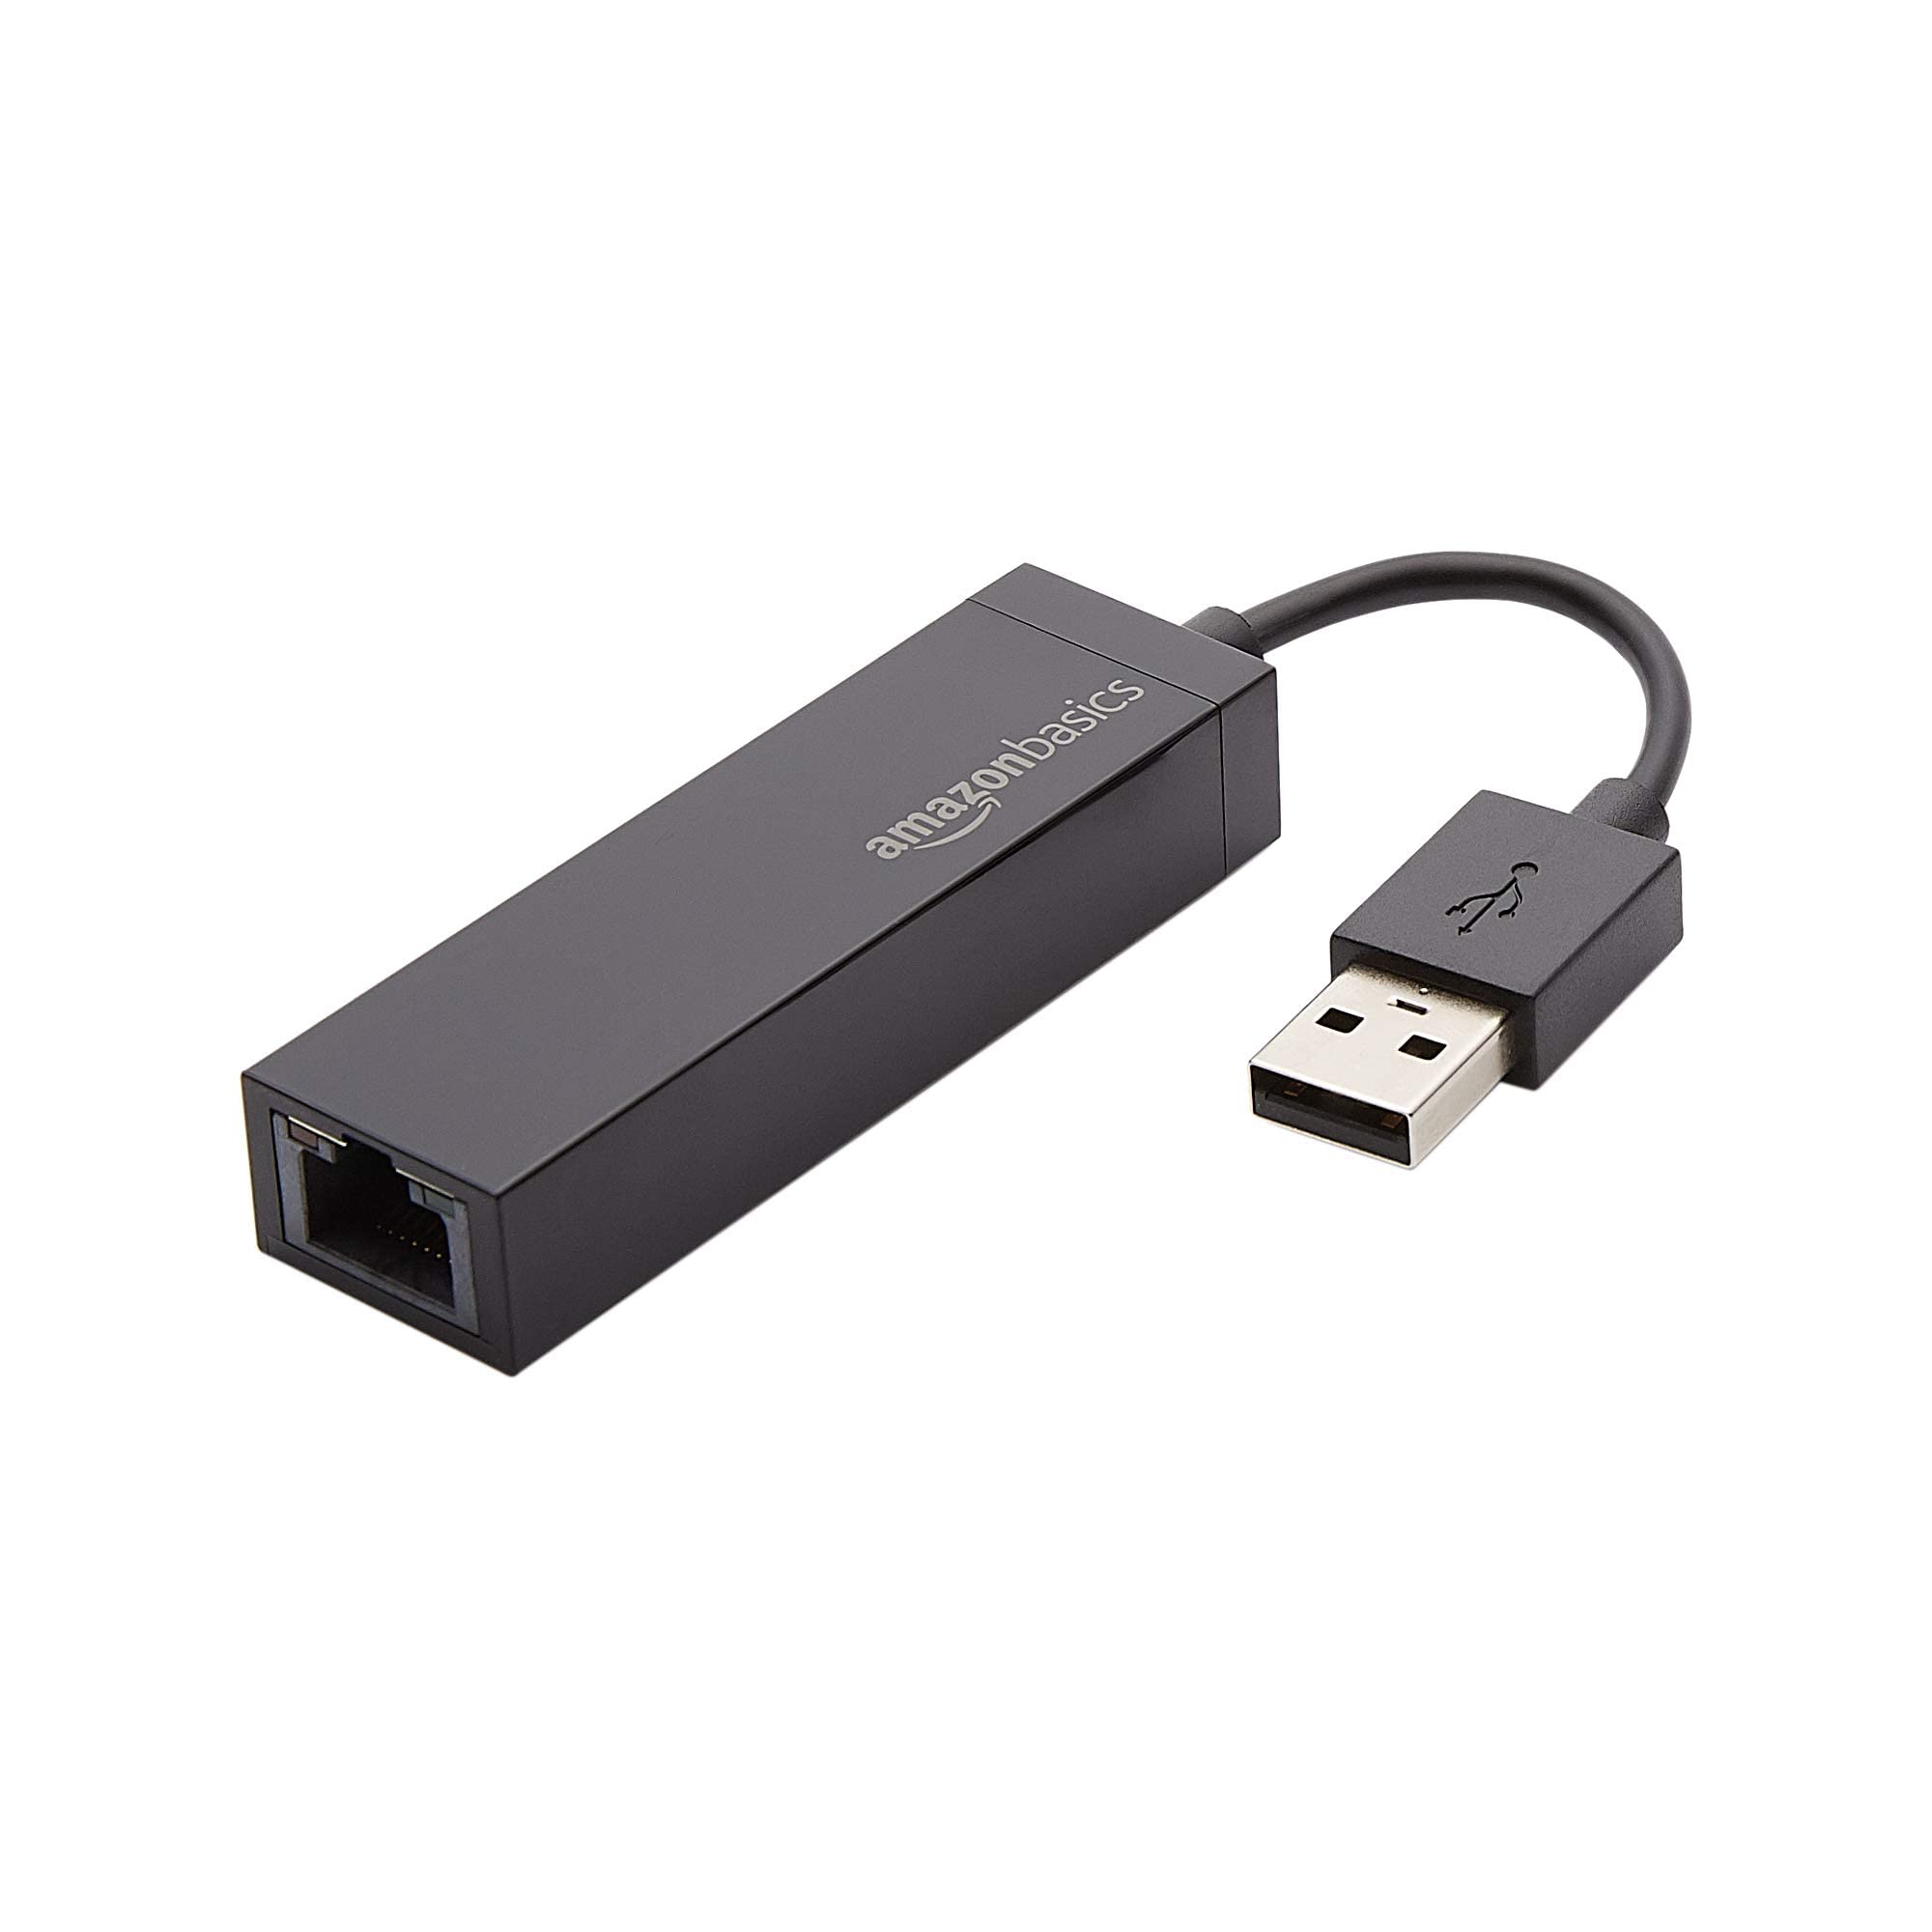 bien vendre Amazon Basics USB 2.0 to 10/100 Ethernet LAN Network Adapter, Noir RfvNuejyr véritable contre